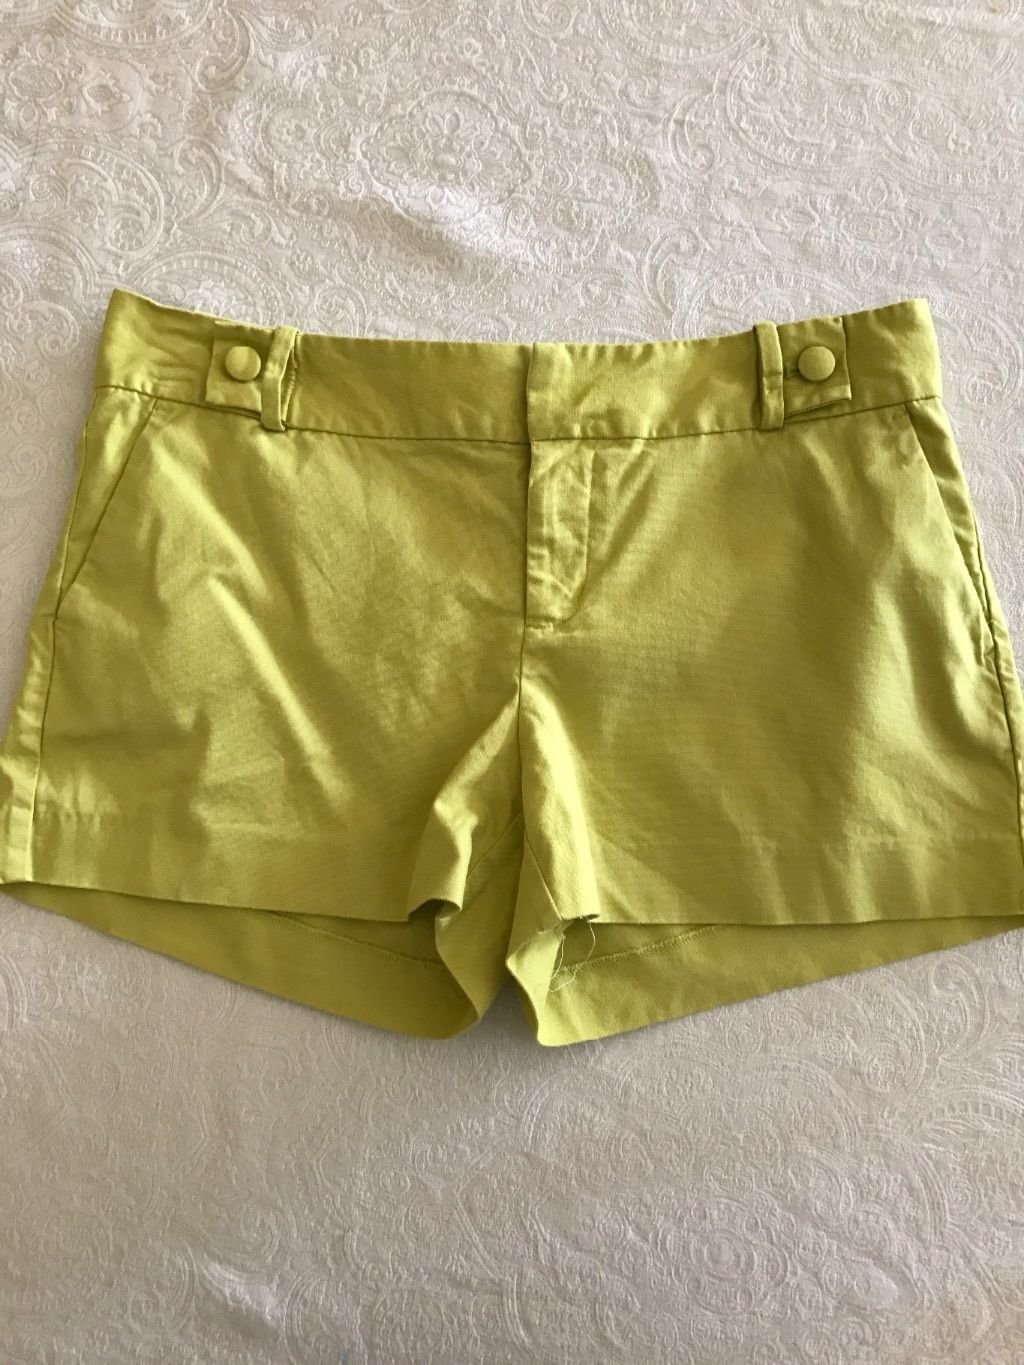 BANANA REPUBLIC Women's Shorts Sz 8 Cotton Blend Ryan Fit Solid Lime Green